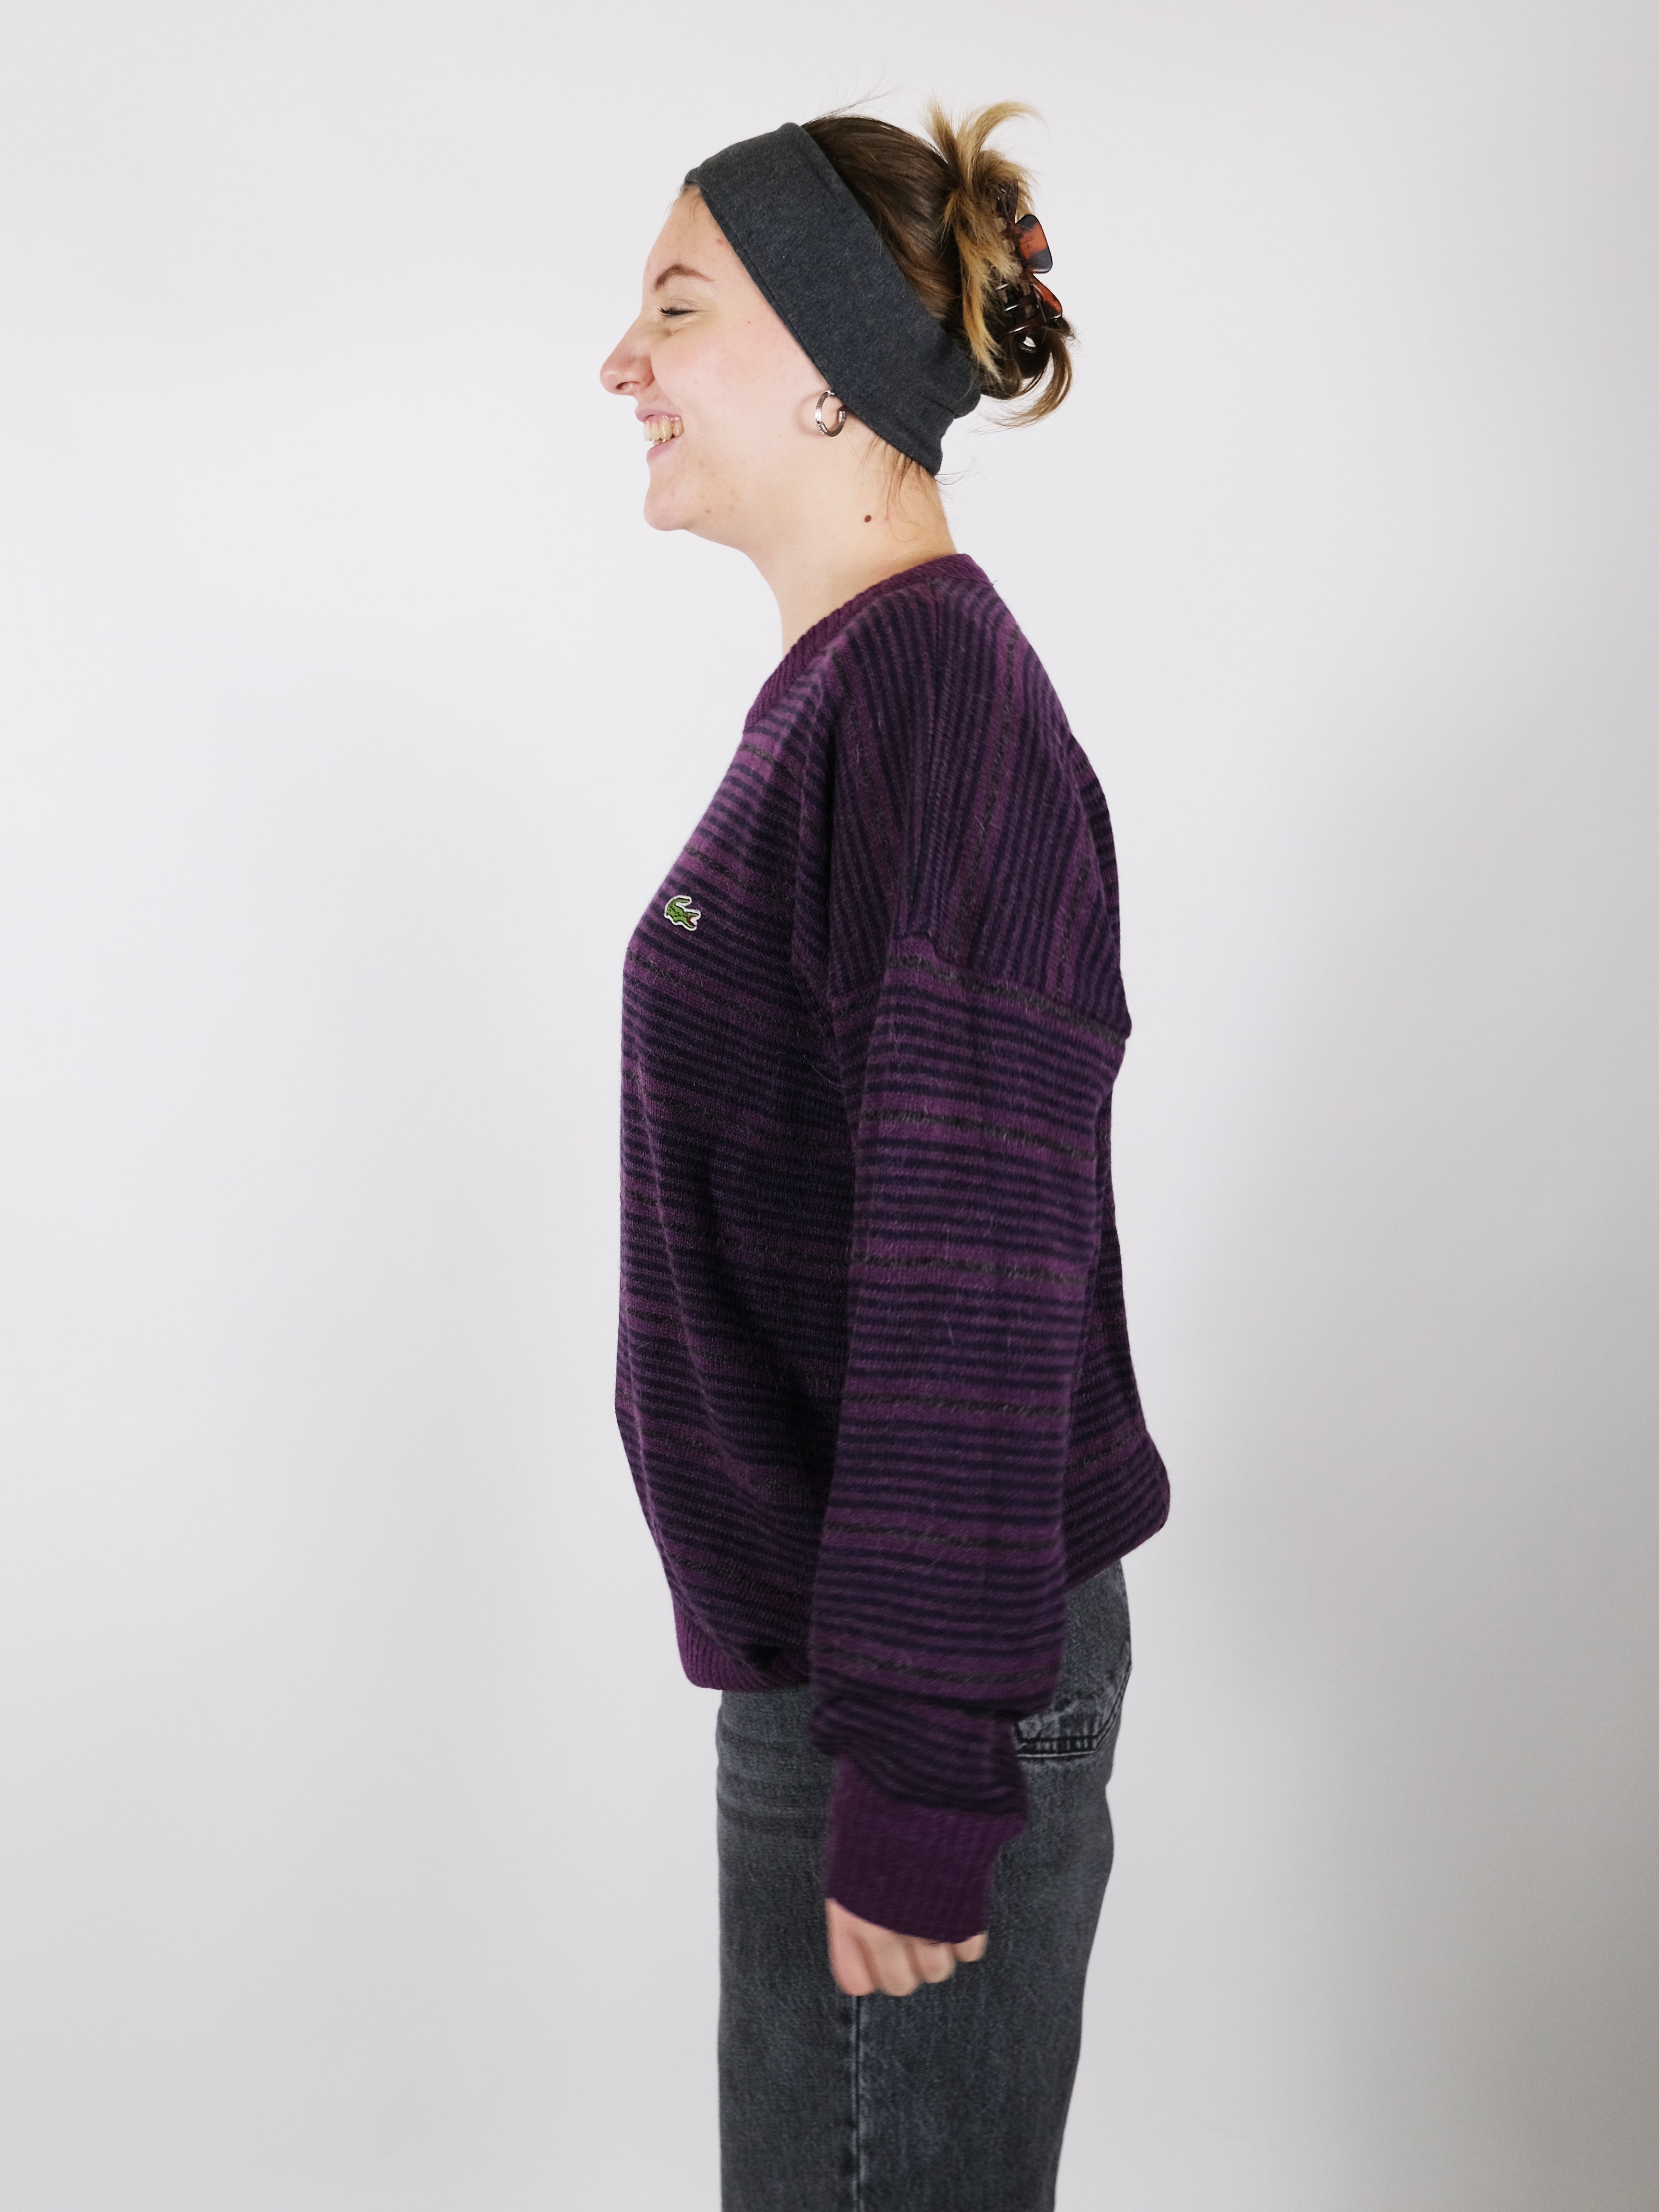 Lacoste sweater purple